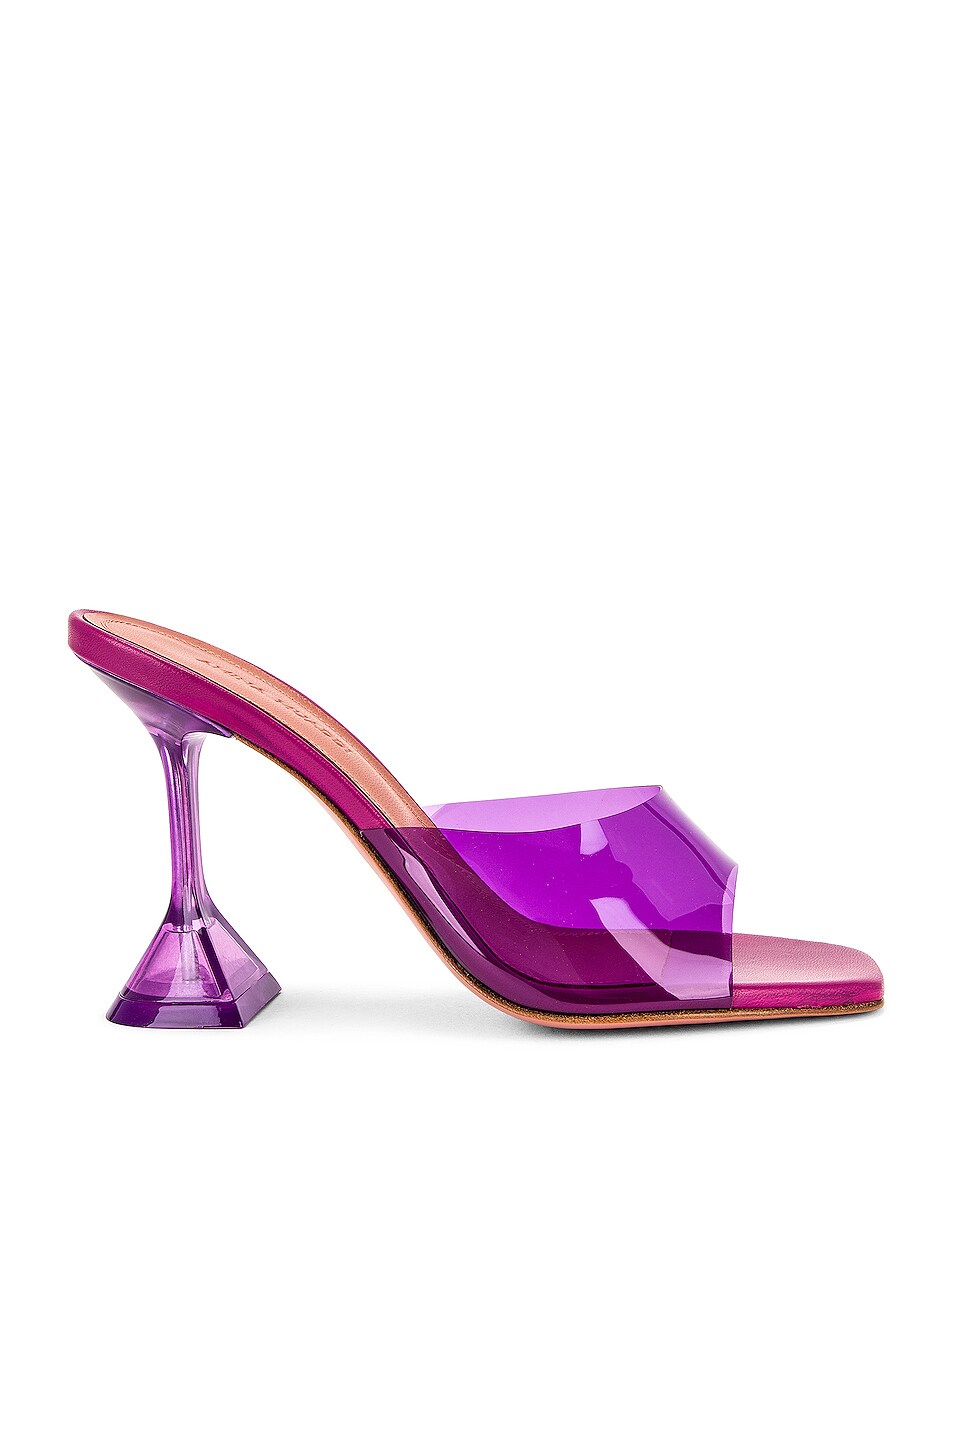 AMINA MUADDI Lupita Glass Sandal in Lilac | FWRD